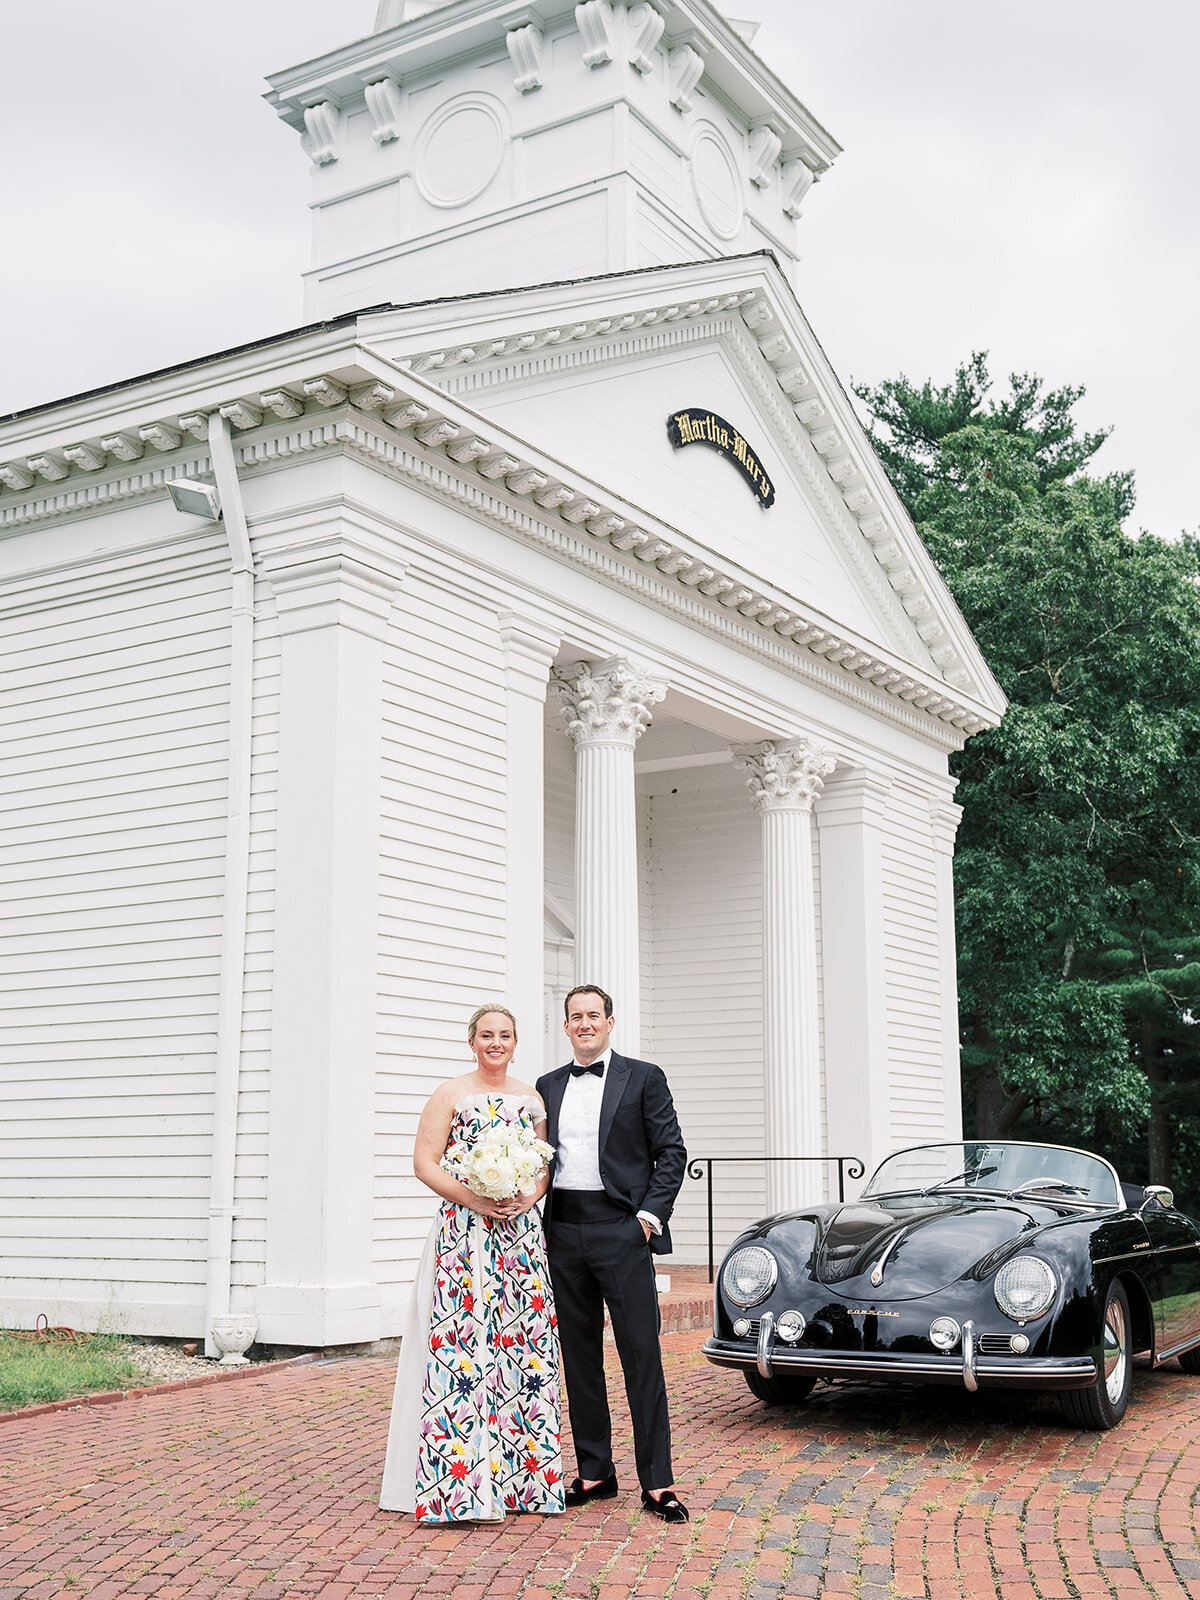 Kate-Murtaugh-Events-Boston-wedding-planner-elopement-microwedding-bride-groom-chapel-ceremony-outdoor-portrait